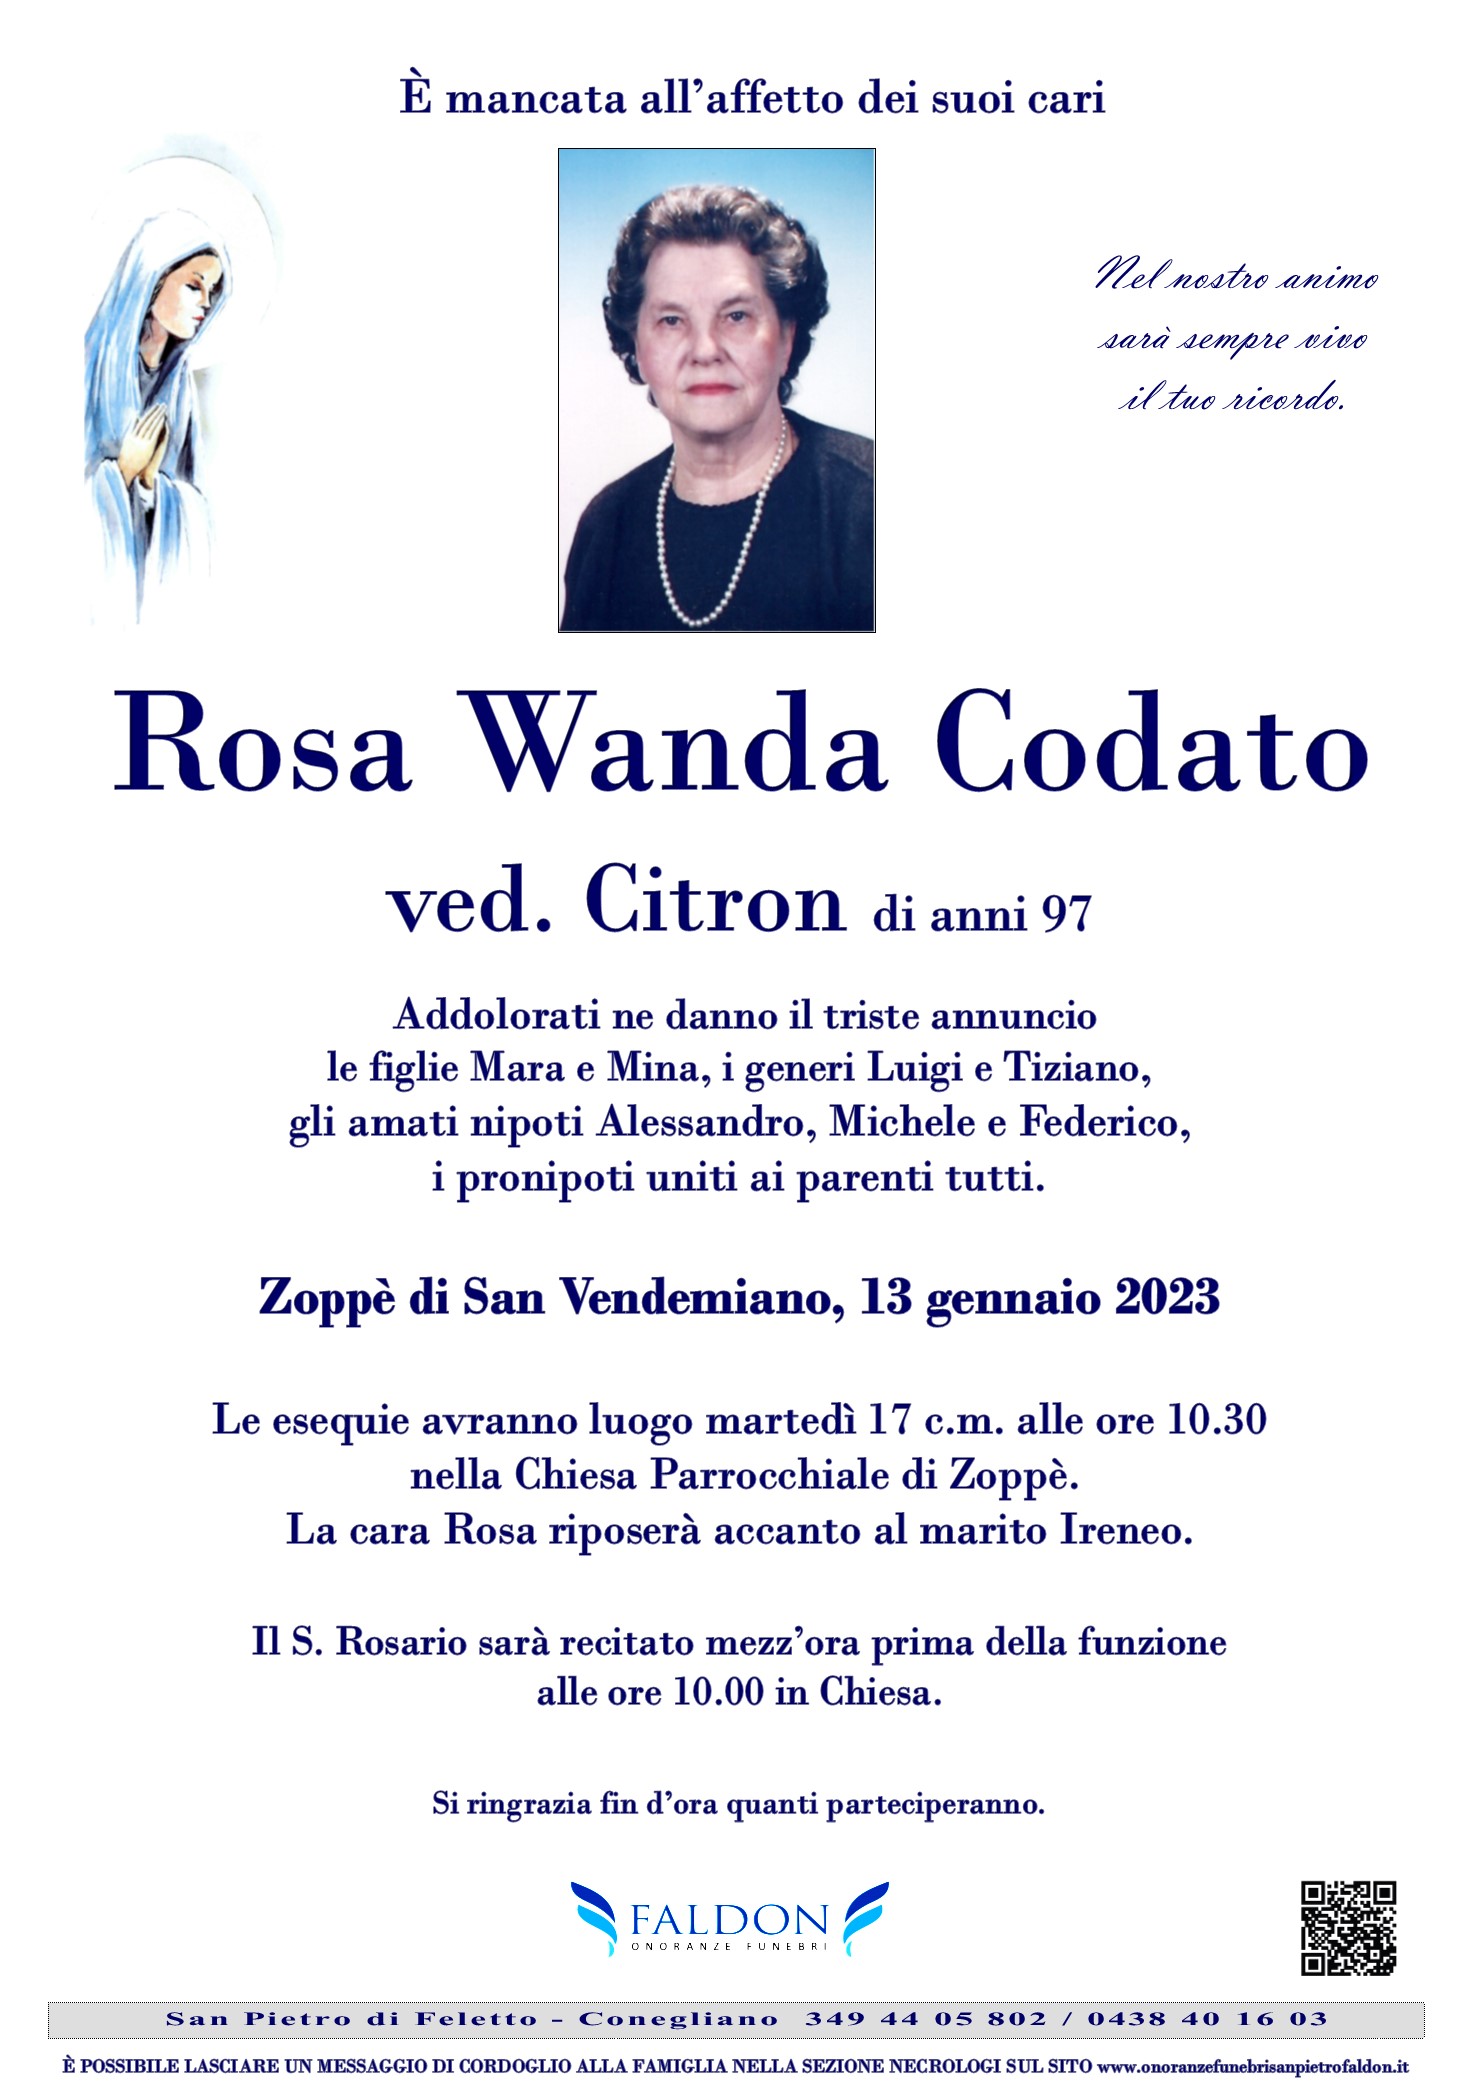 Rosa Wanda Codato